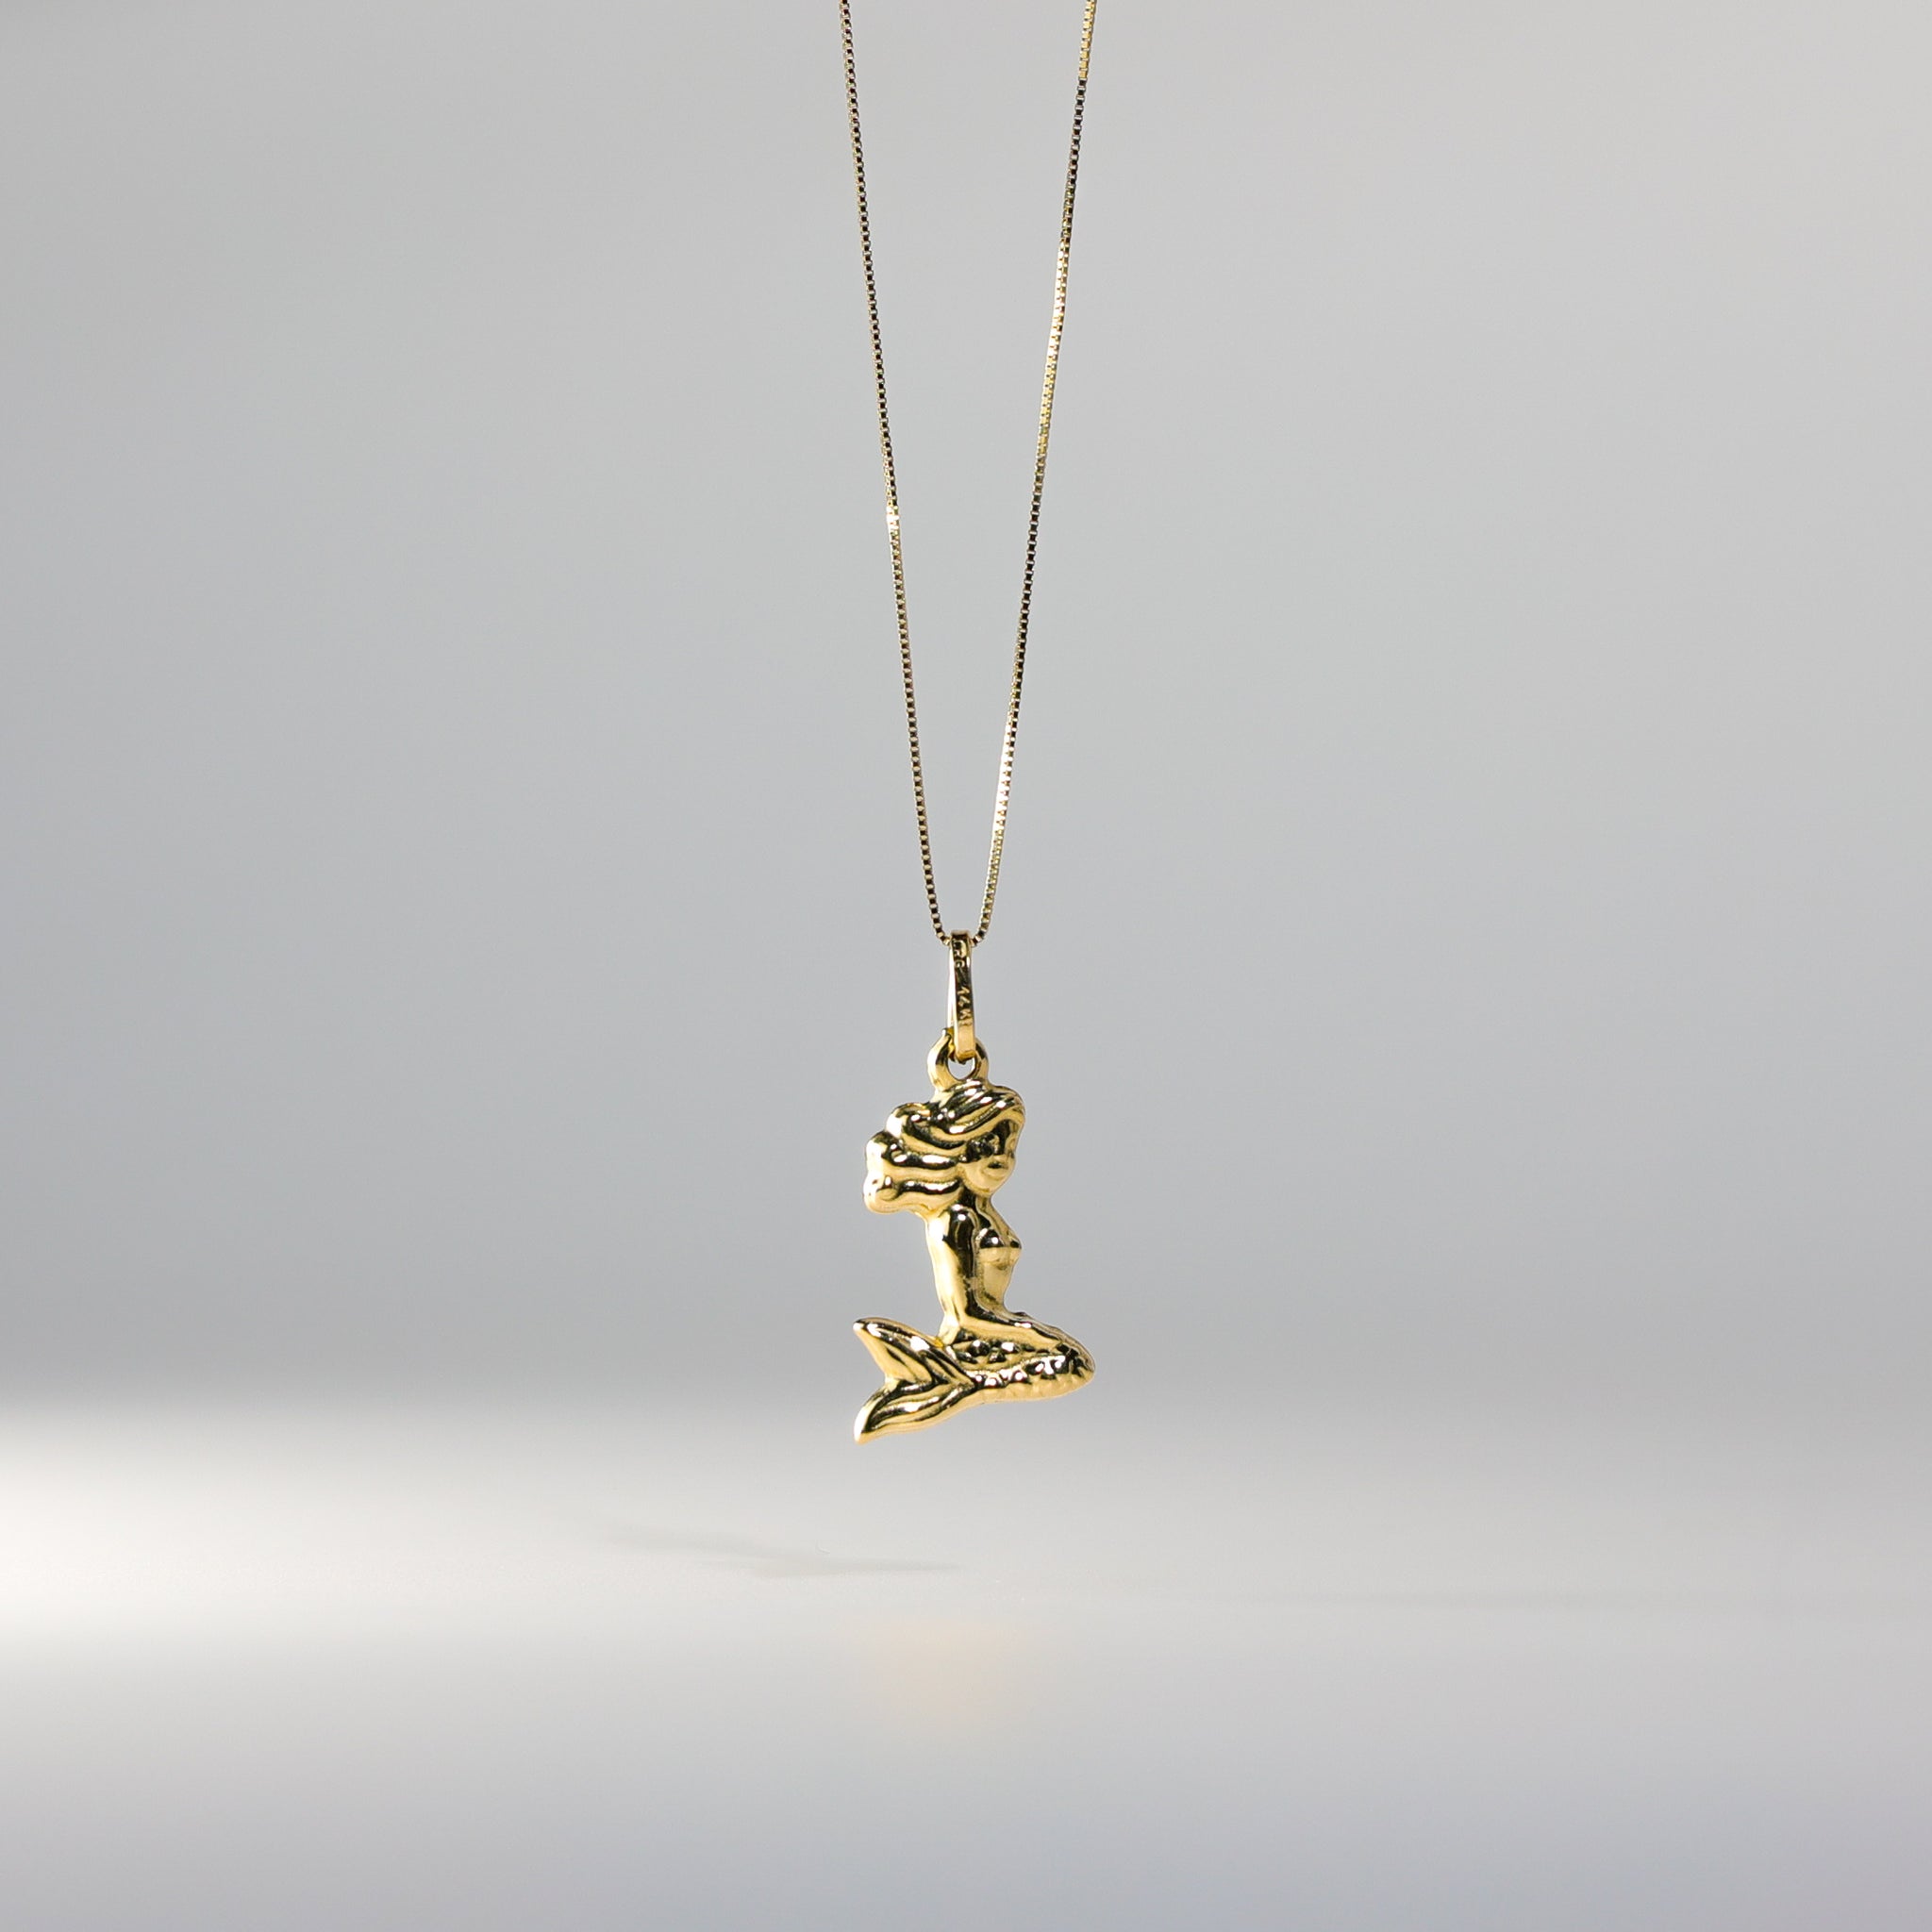 Gold Mermaid Pendant Model-1709 - Charlie & Co. Jewelry